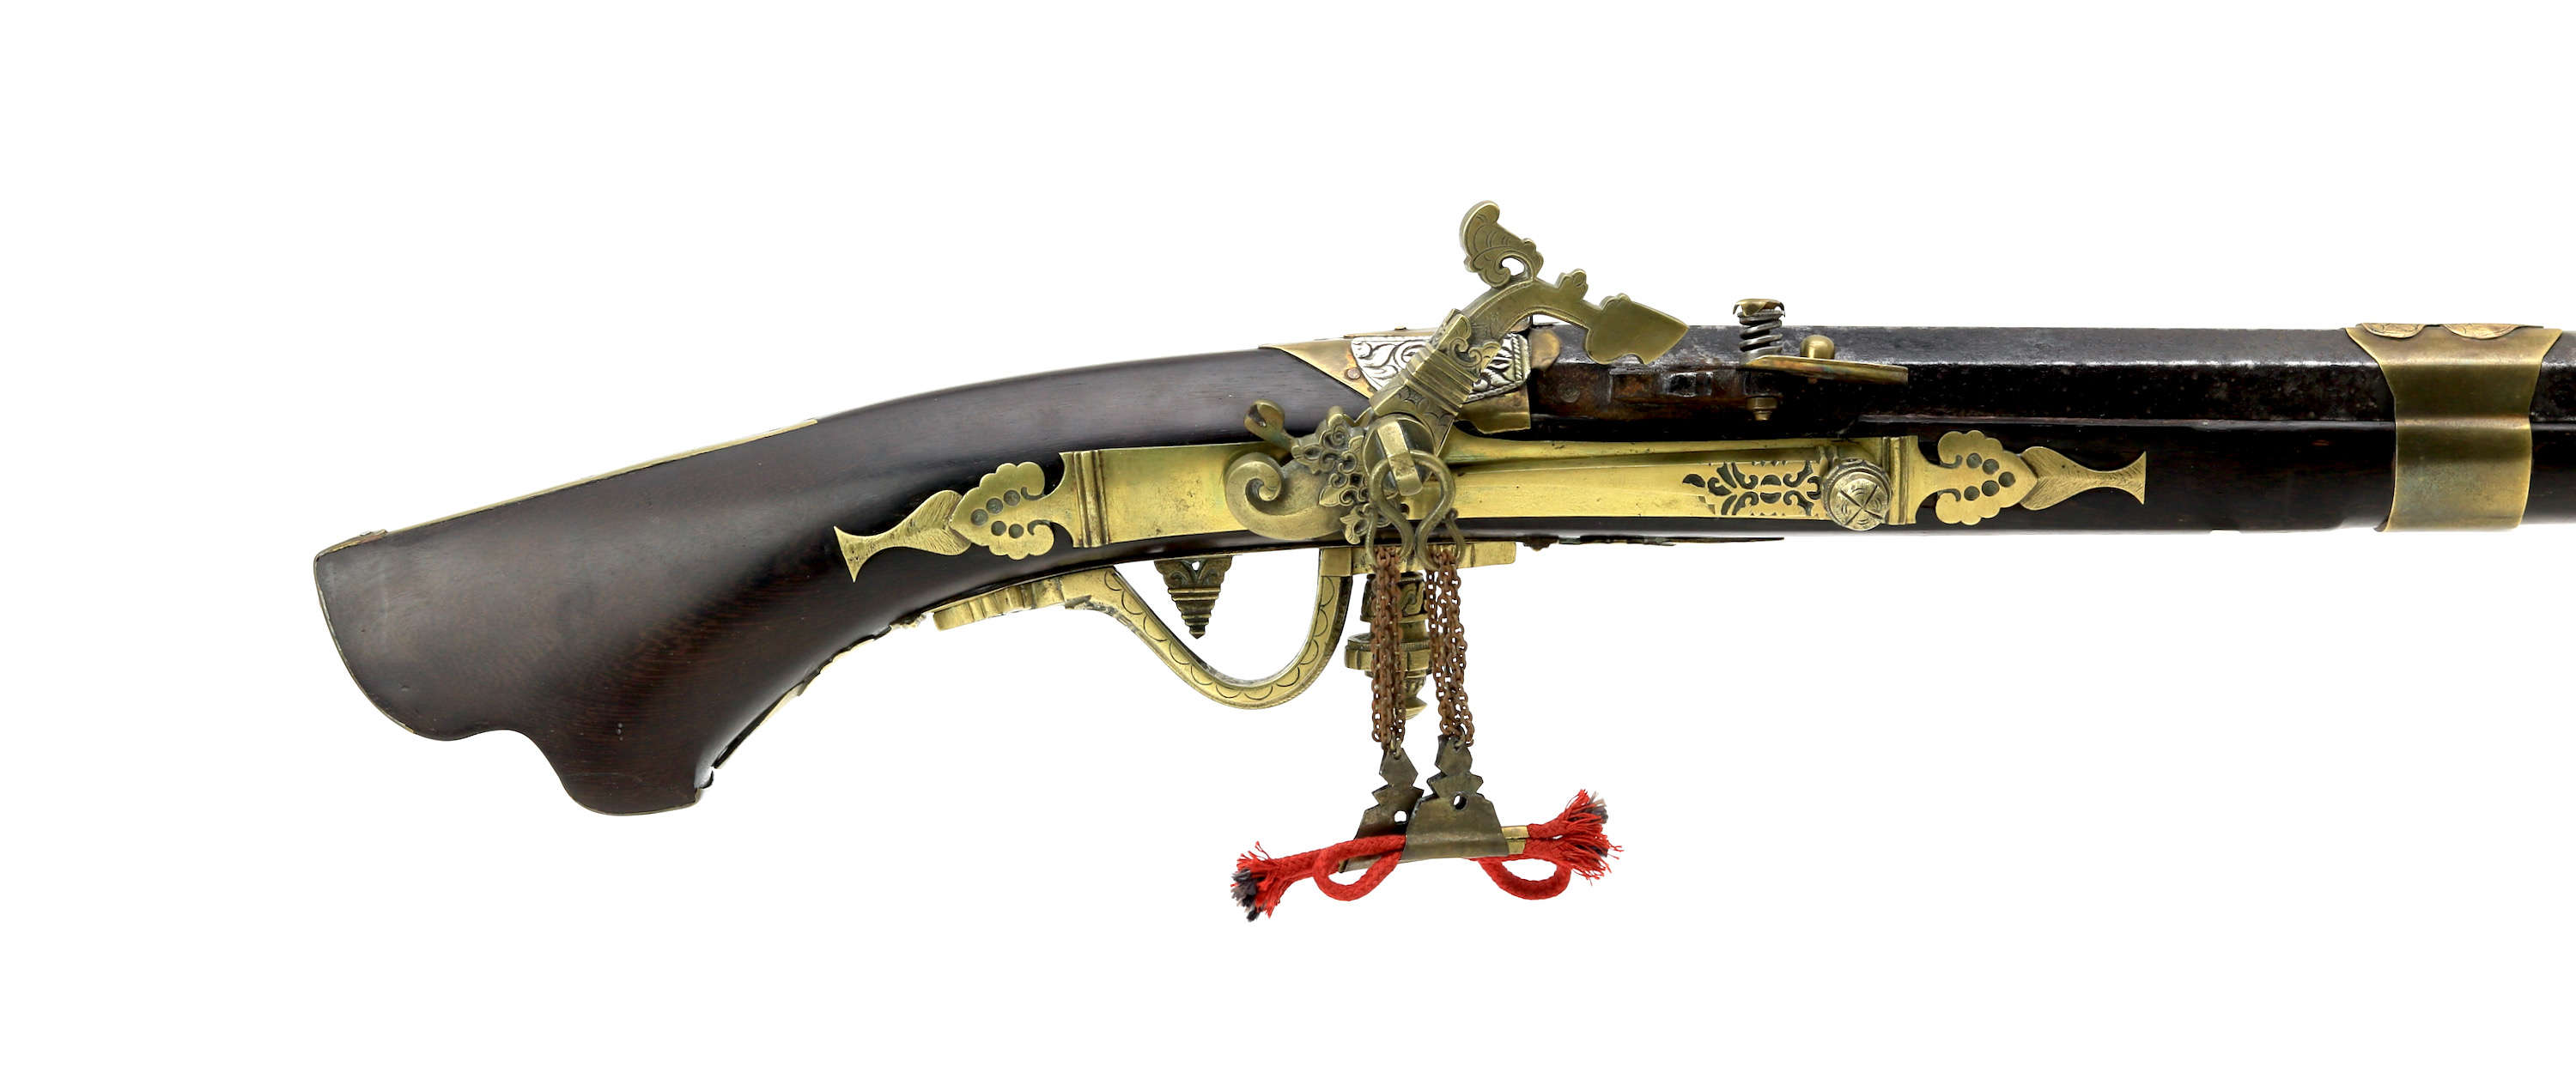 Padri gun from Sumatra